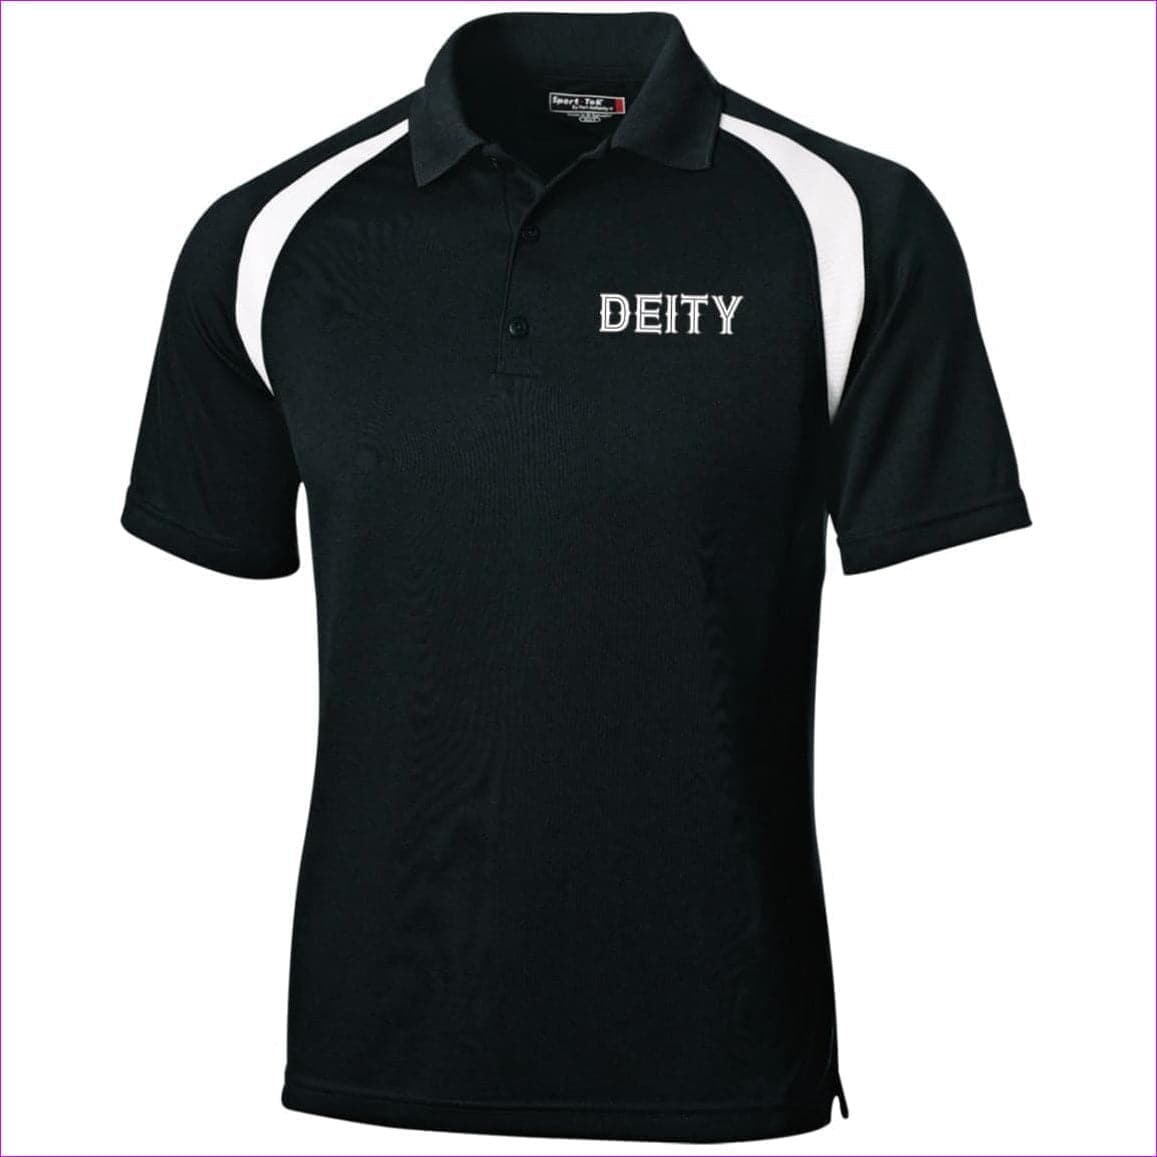 Black/White - Deity Moisture-Wicking Golf Shirt - Mens Polo Shirts at TFC&H Co.